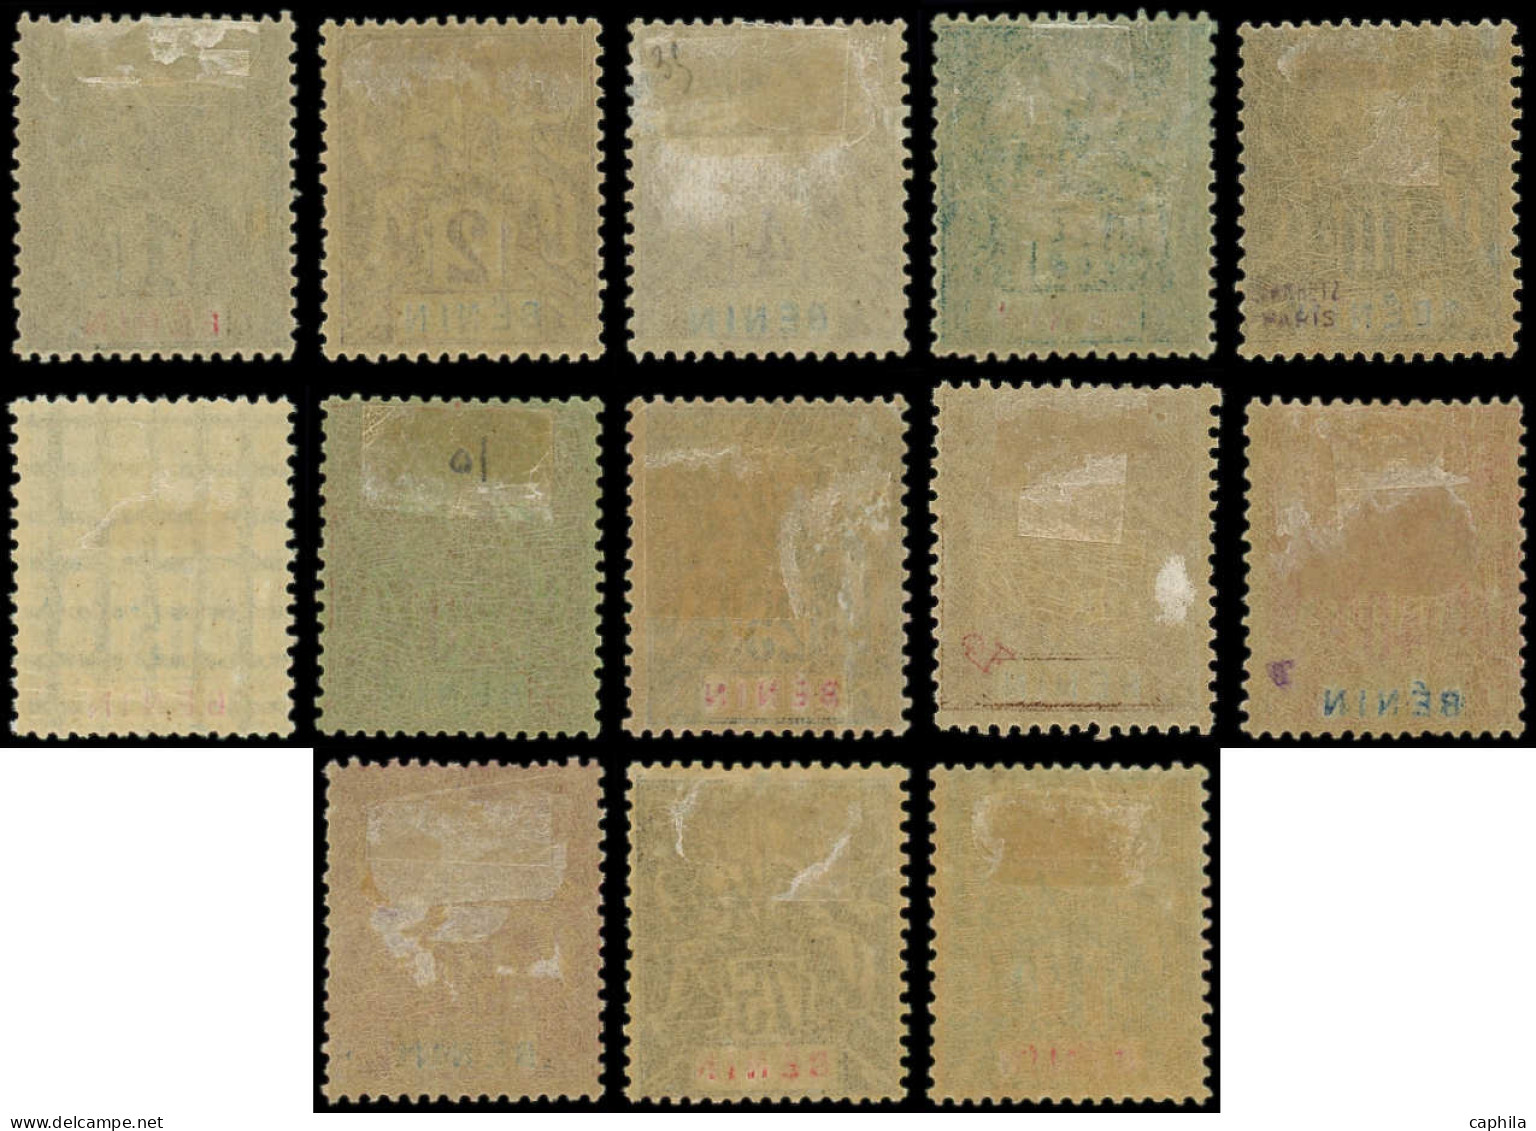 * BENIN - Poste - 33/45, Complet 13 Valeurs: Type Groupe - Unused Stamps